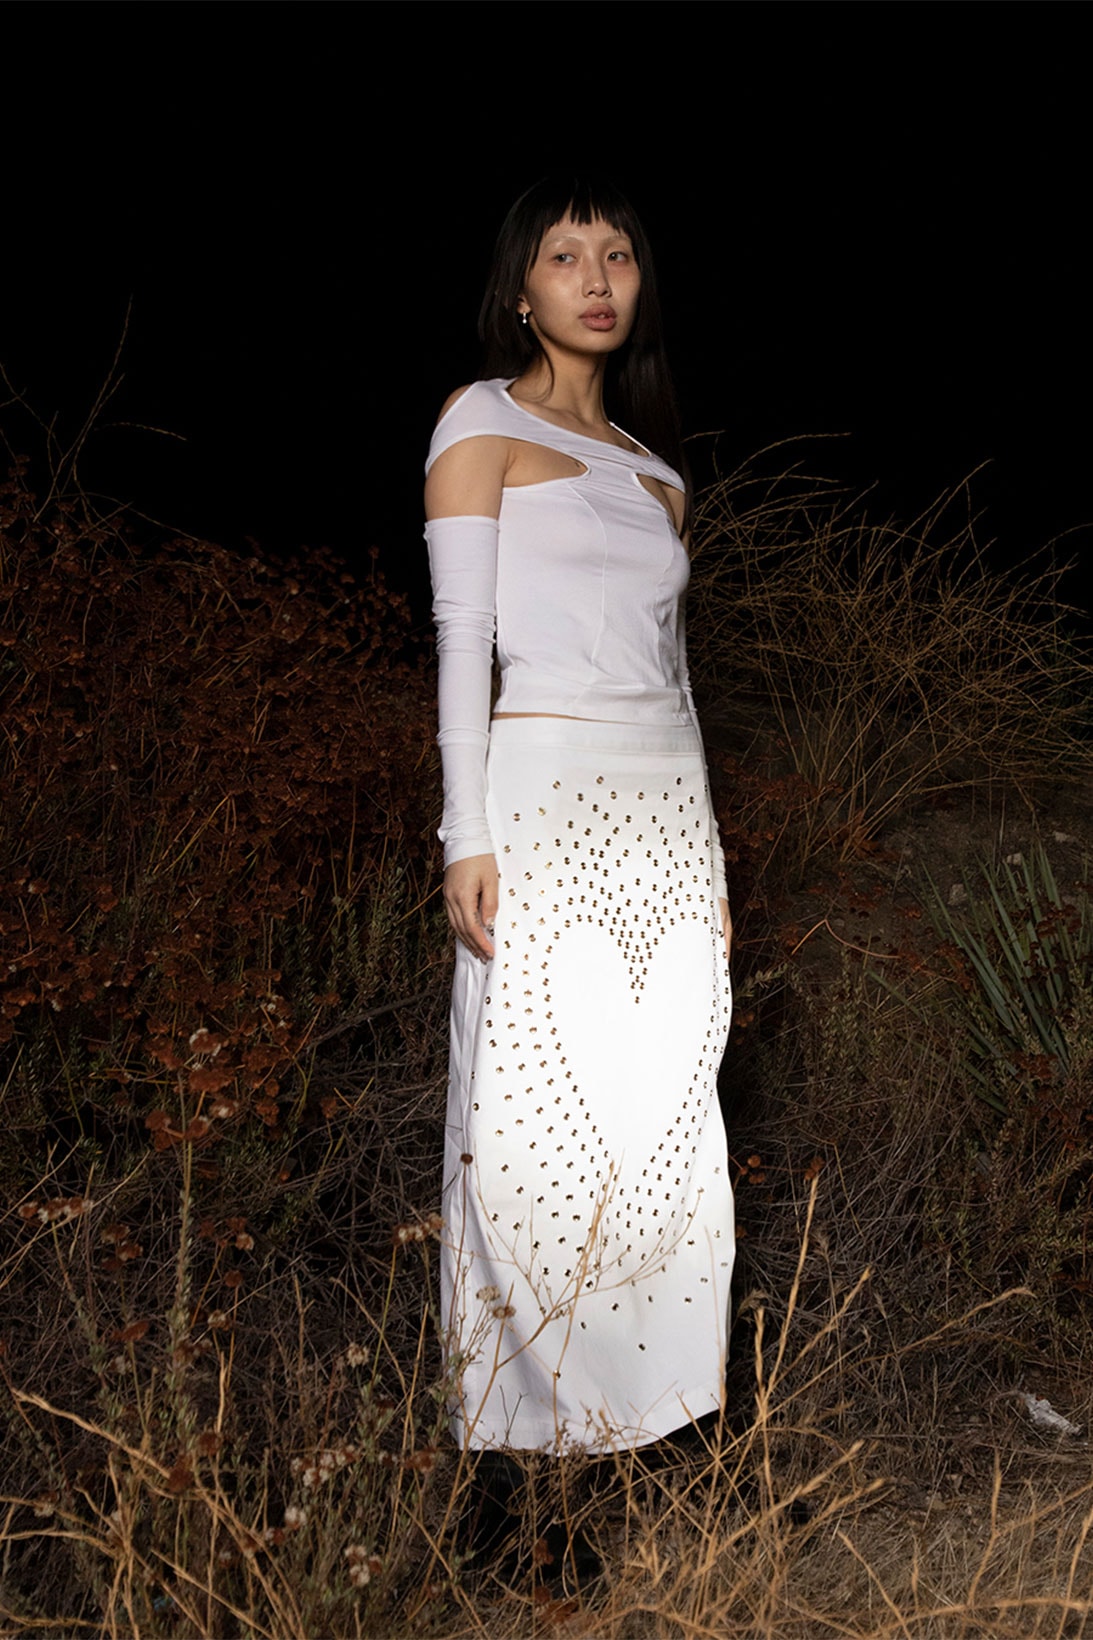 nibgnus Emerging Korean Designer Sungbin Hong MAGO Collection Lookbook Release